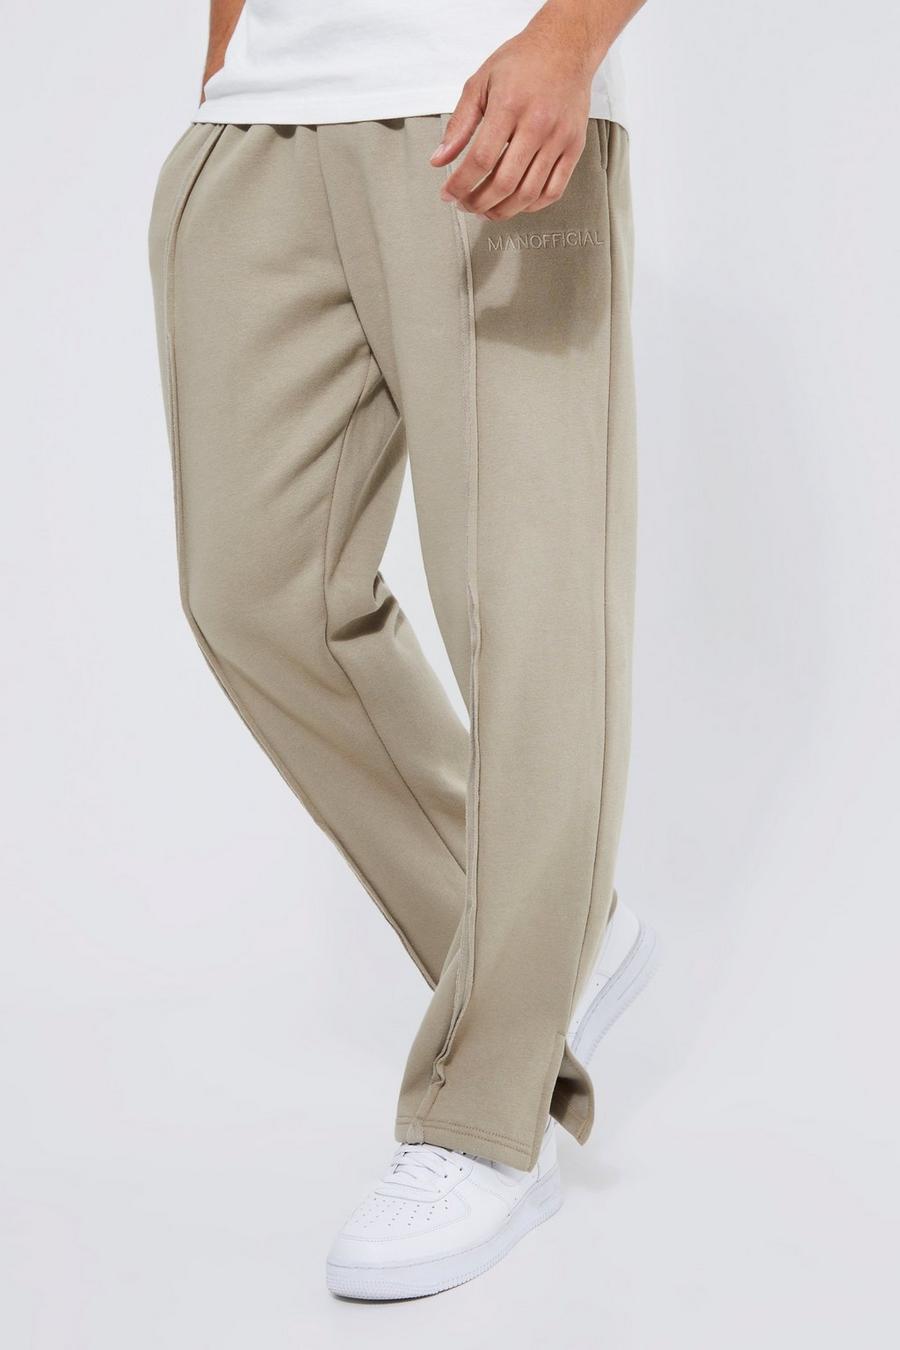 Pantaloni tuta comodi Man Official con spacco sul fondo, Khaki image number 1